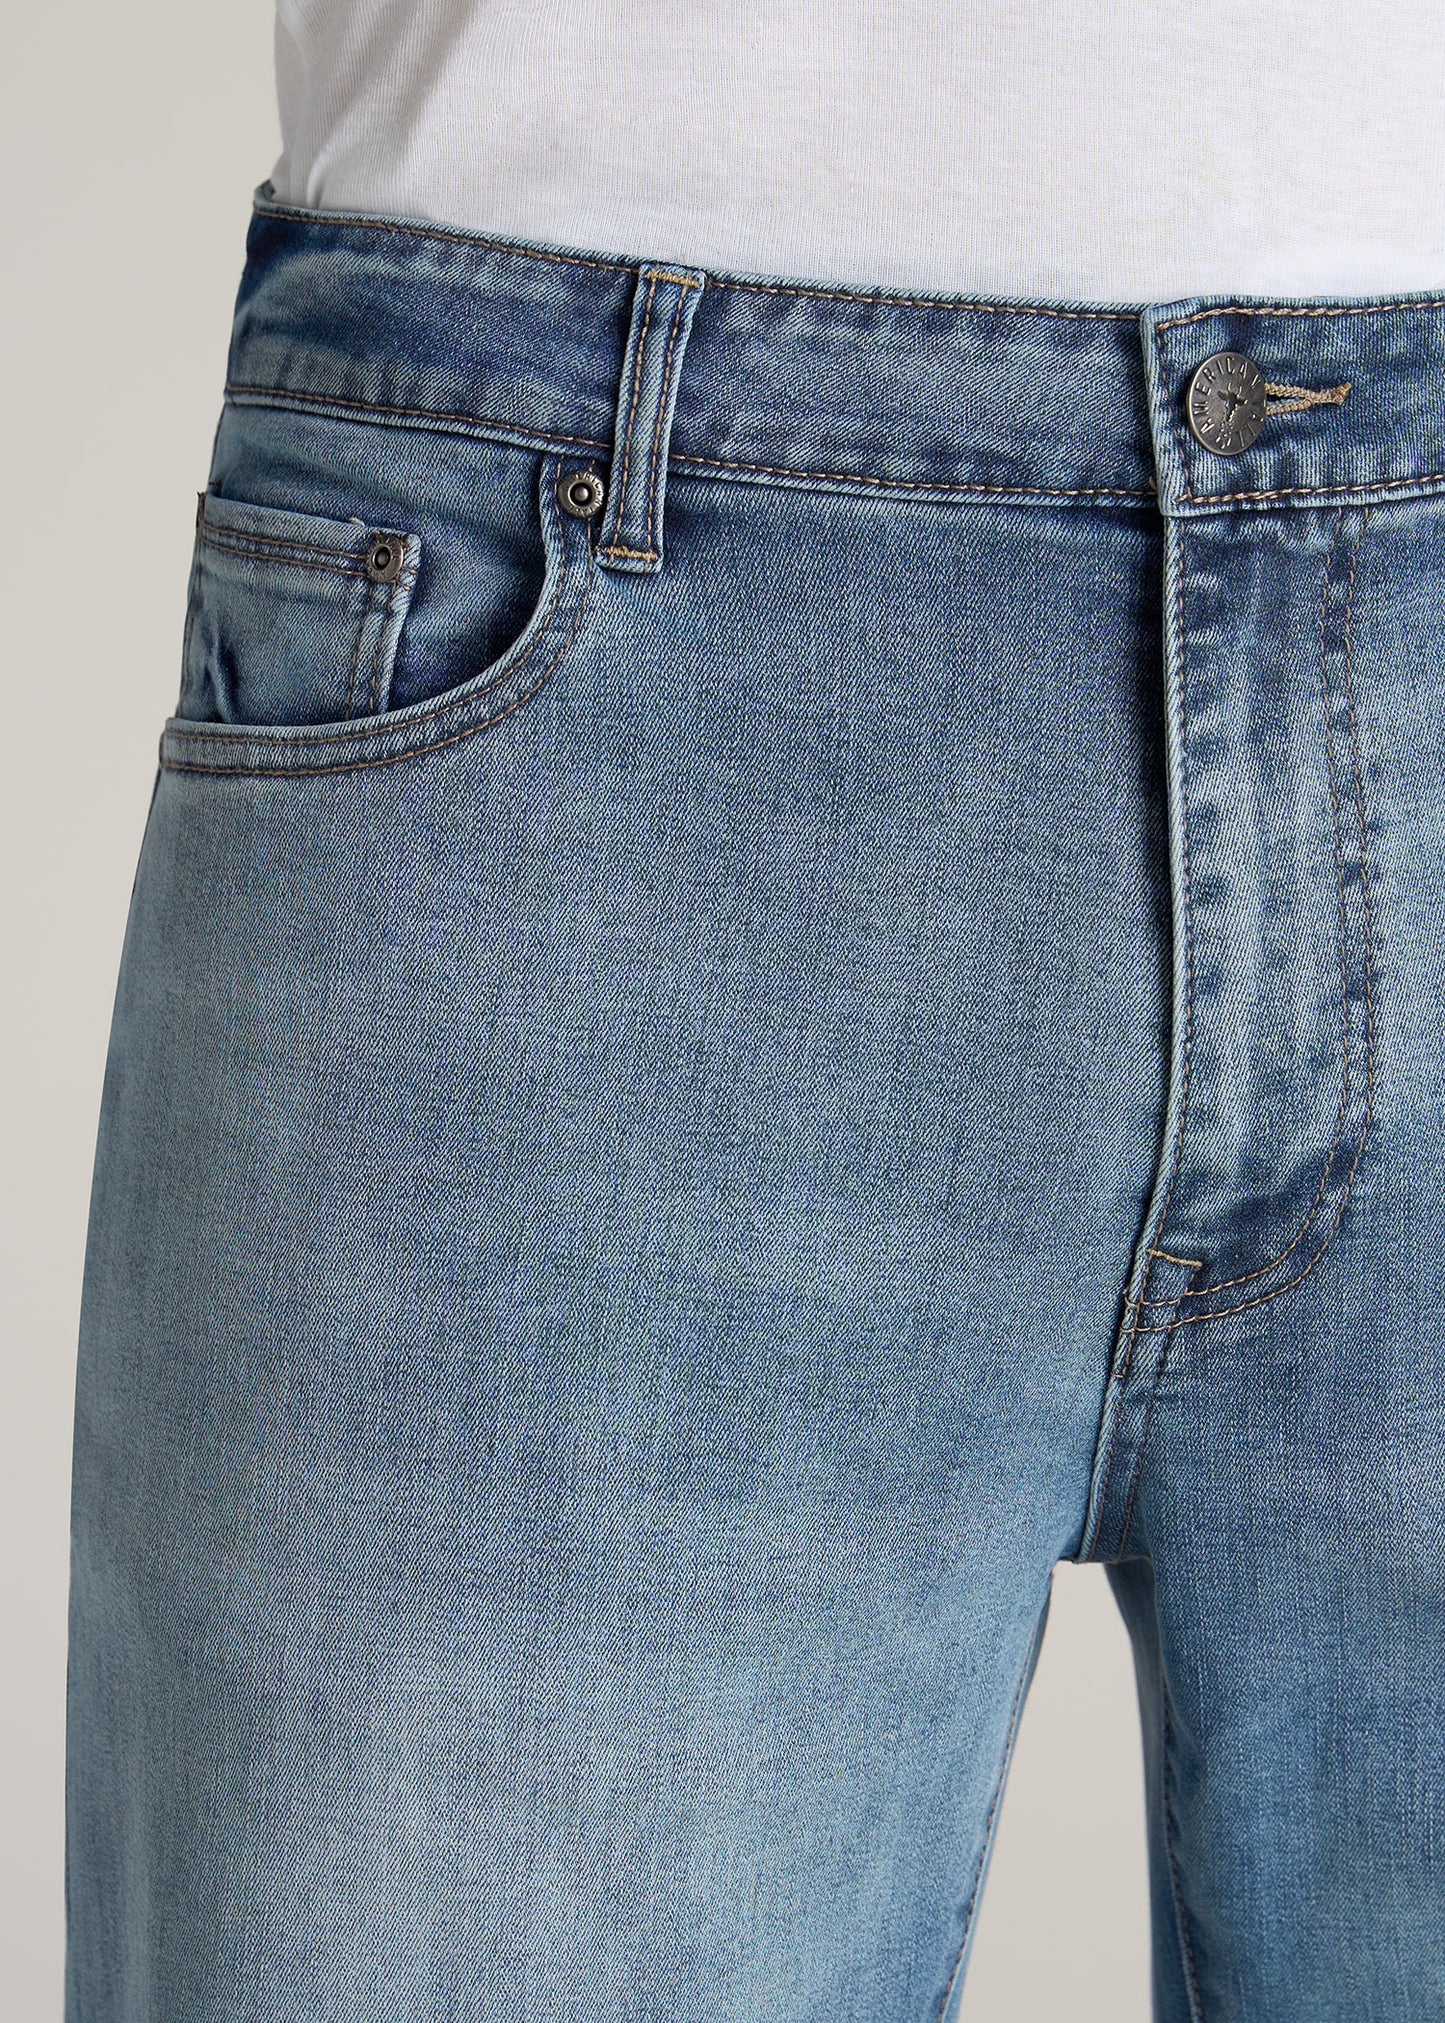 American-Tall-Men-Mason-SEMI-RELAXED-Jeans-New-Fade-pocket